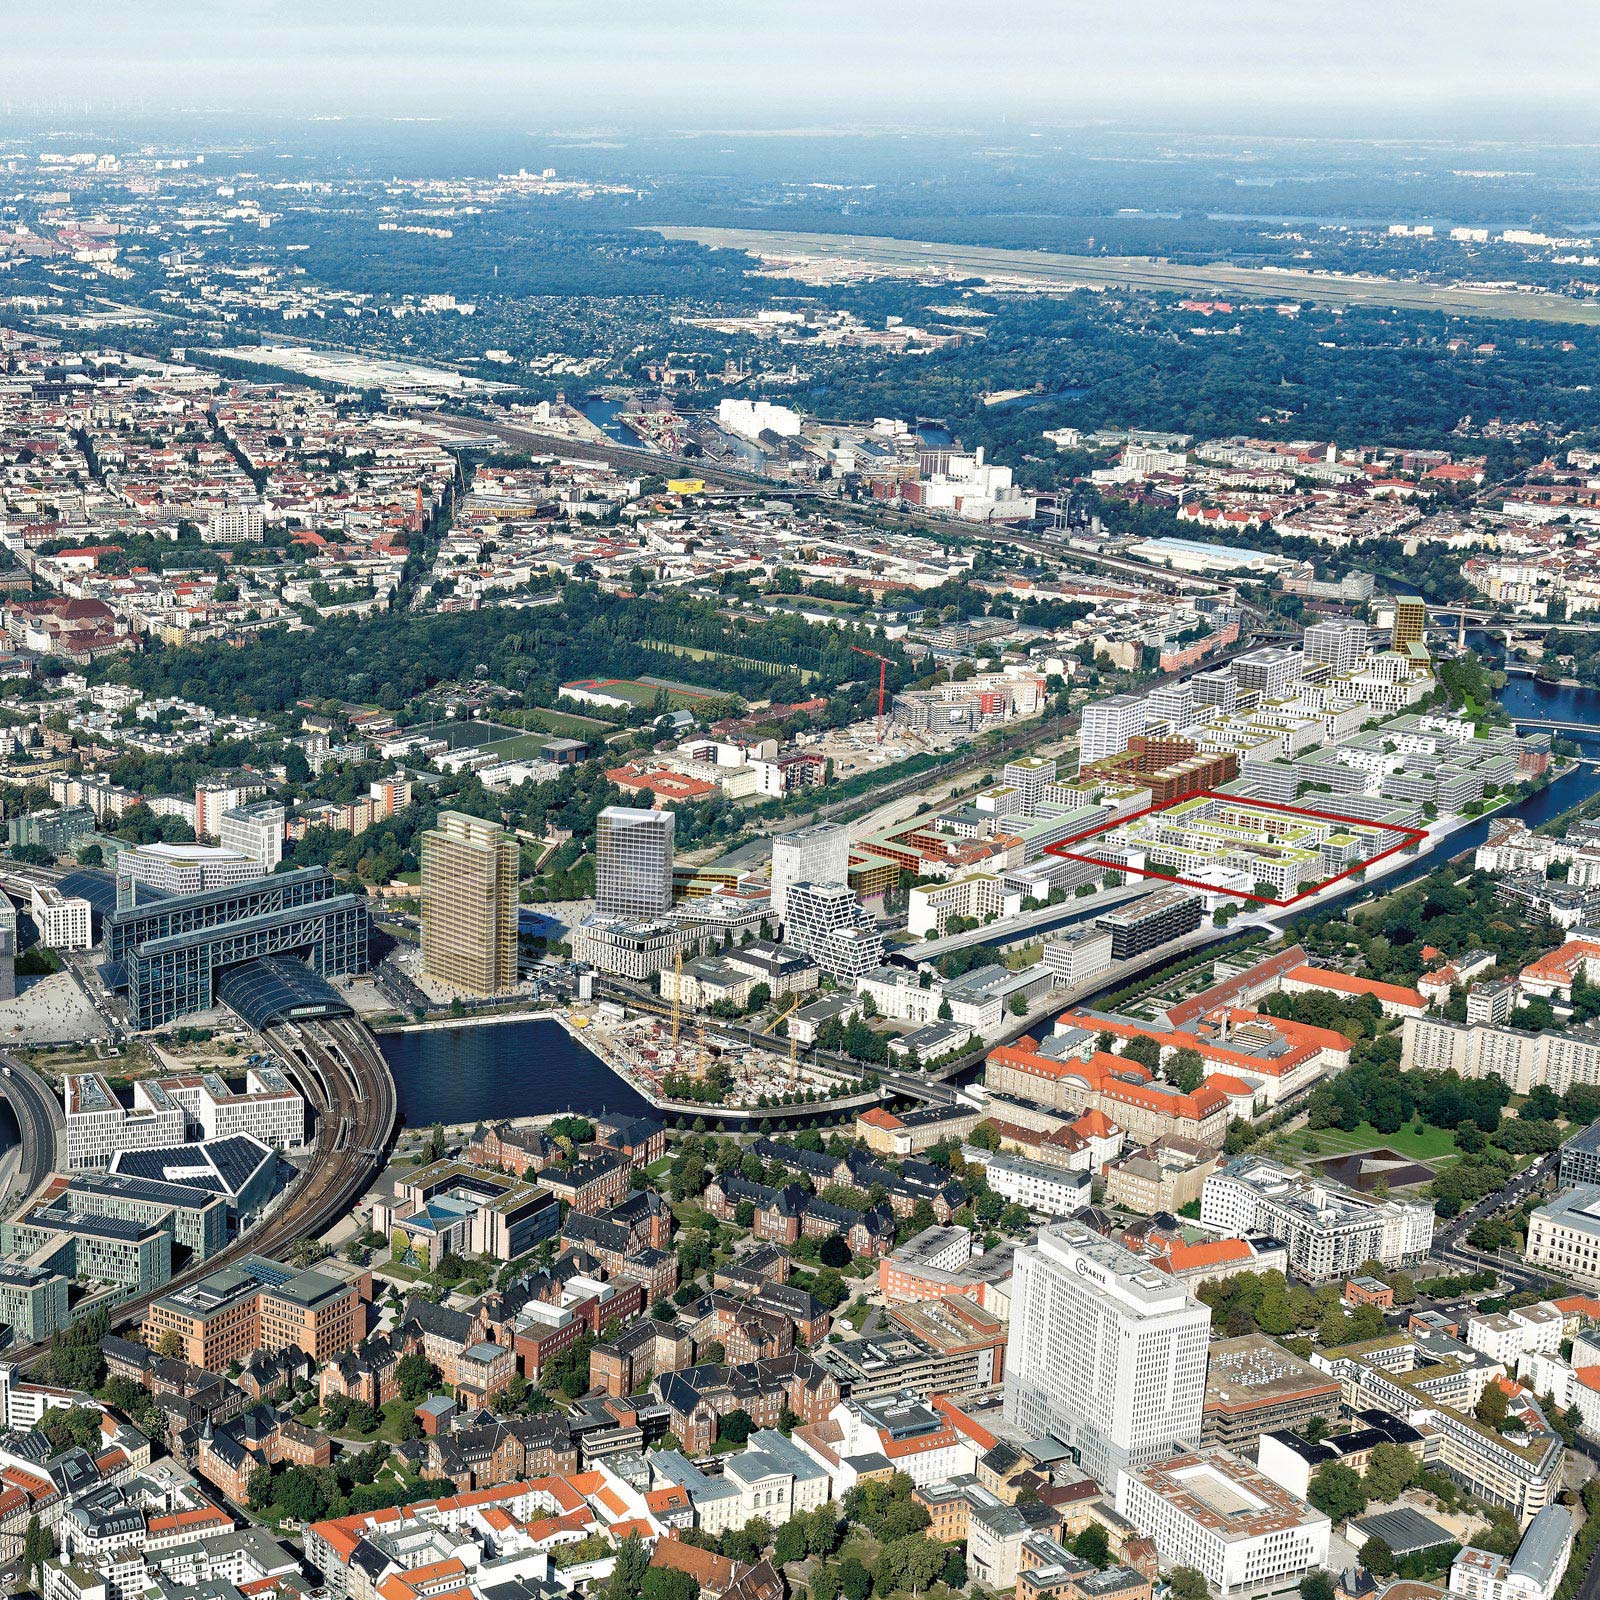 Luftbild mit Fokus des Projektes Europacity Quartier Süd